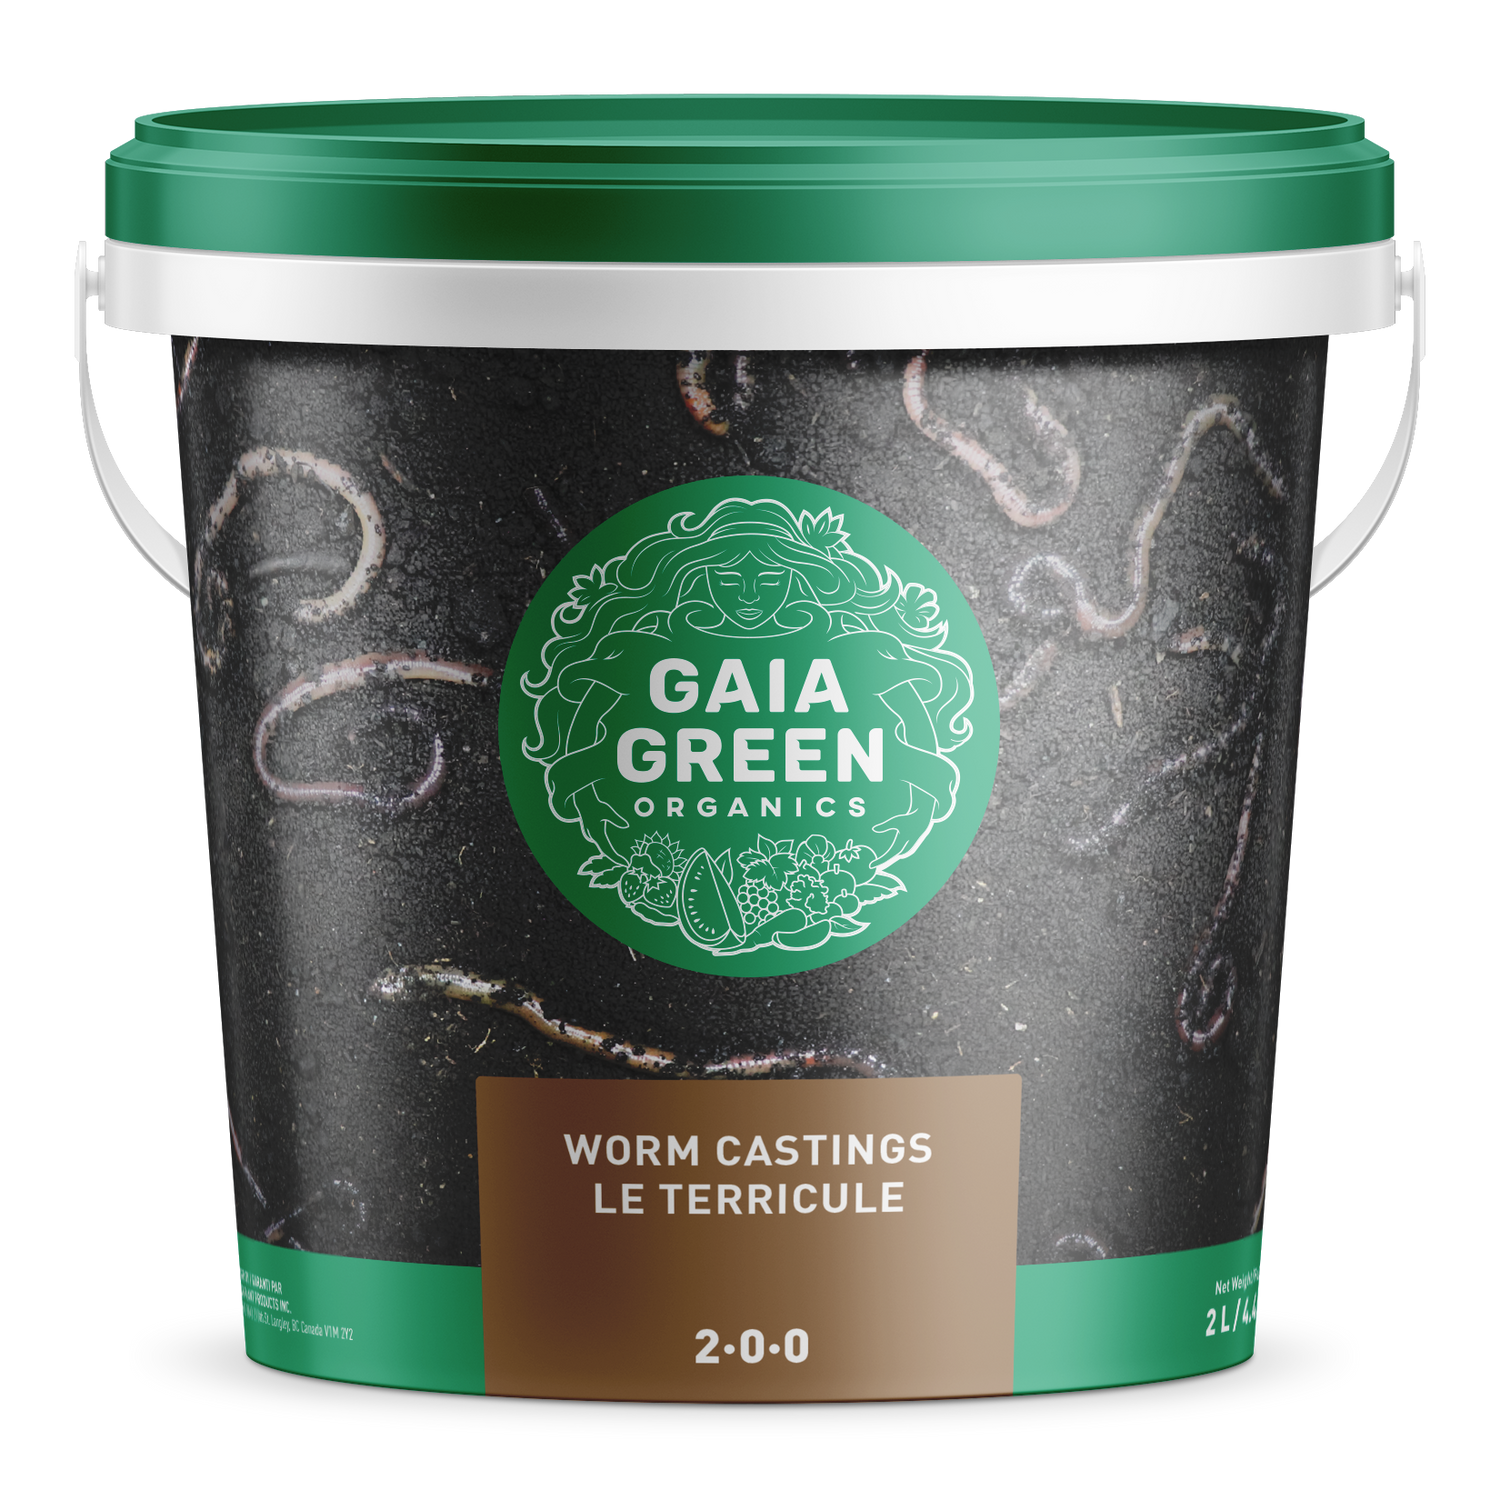 Gaia Green Worm Castings 2-0-0